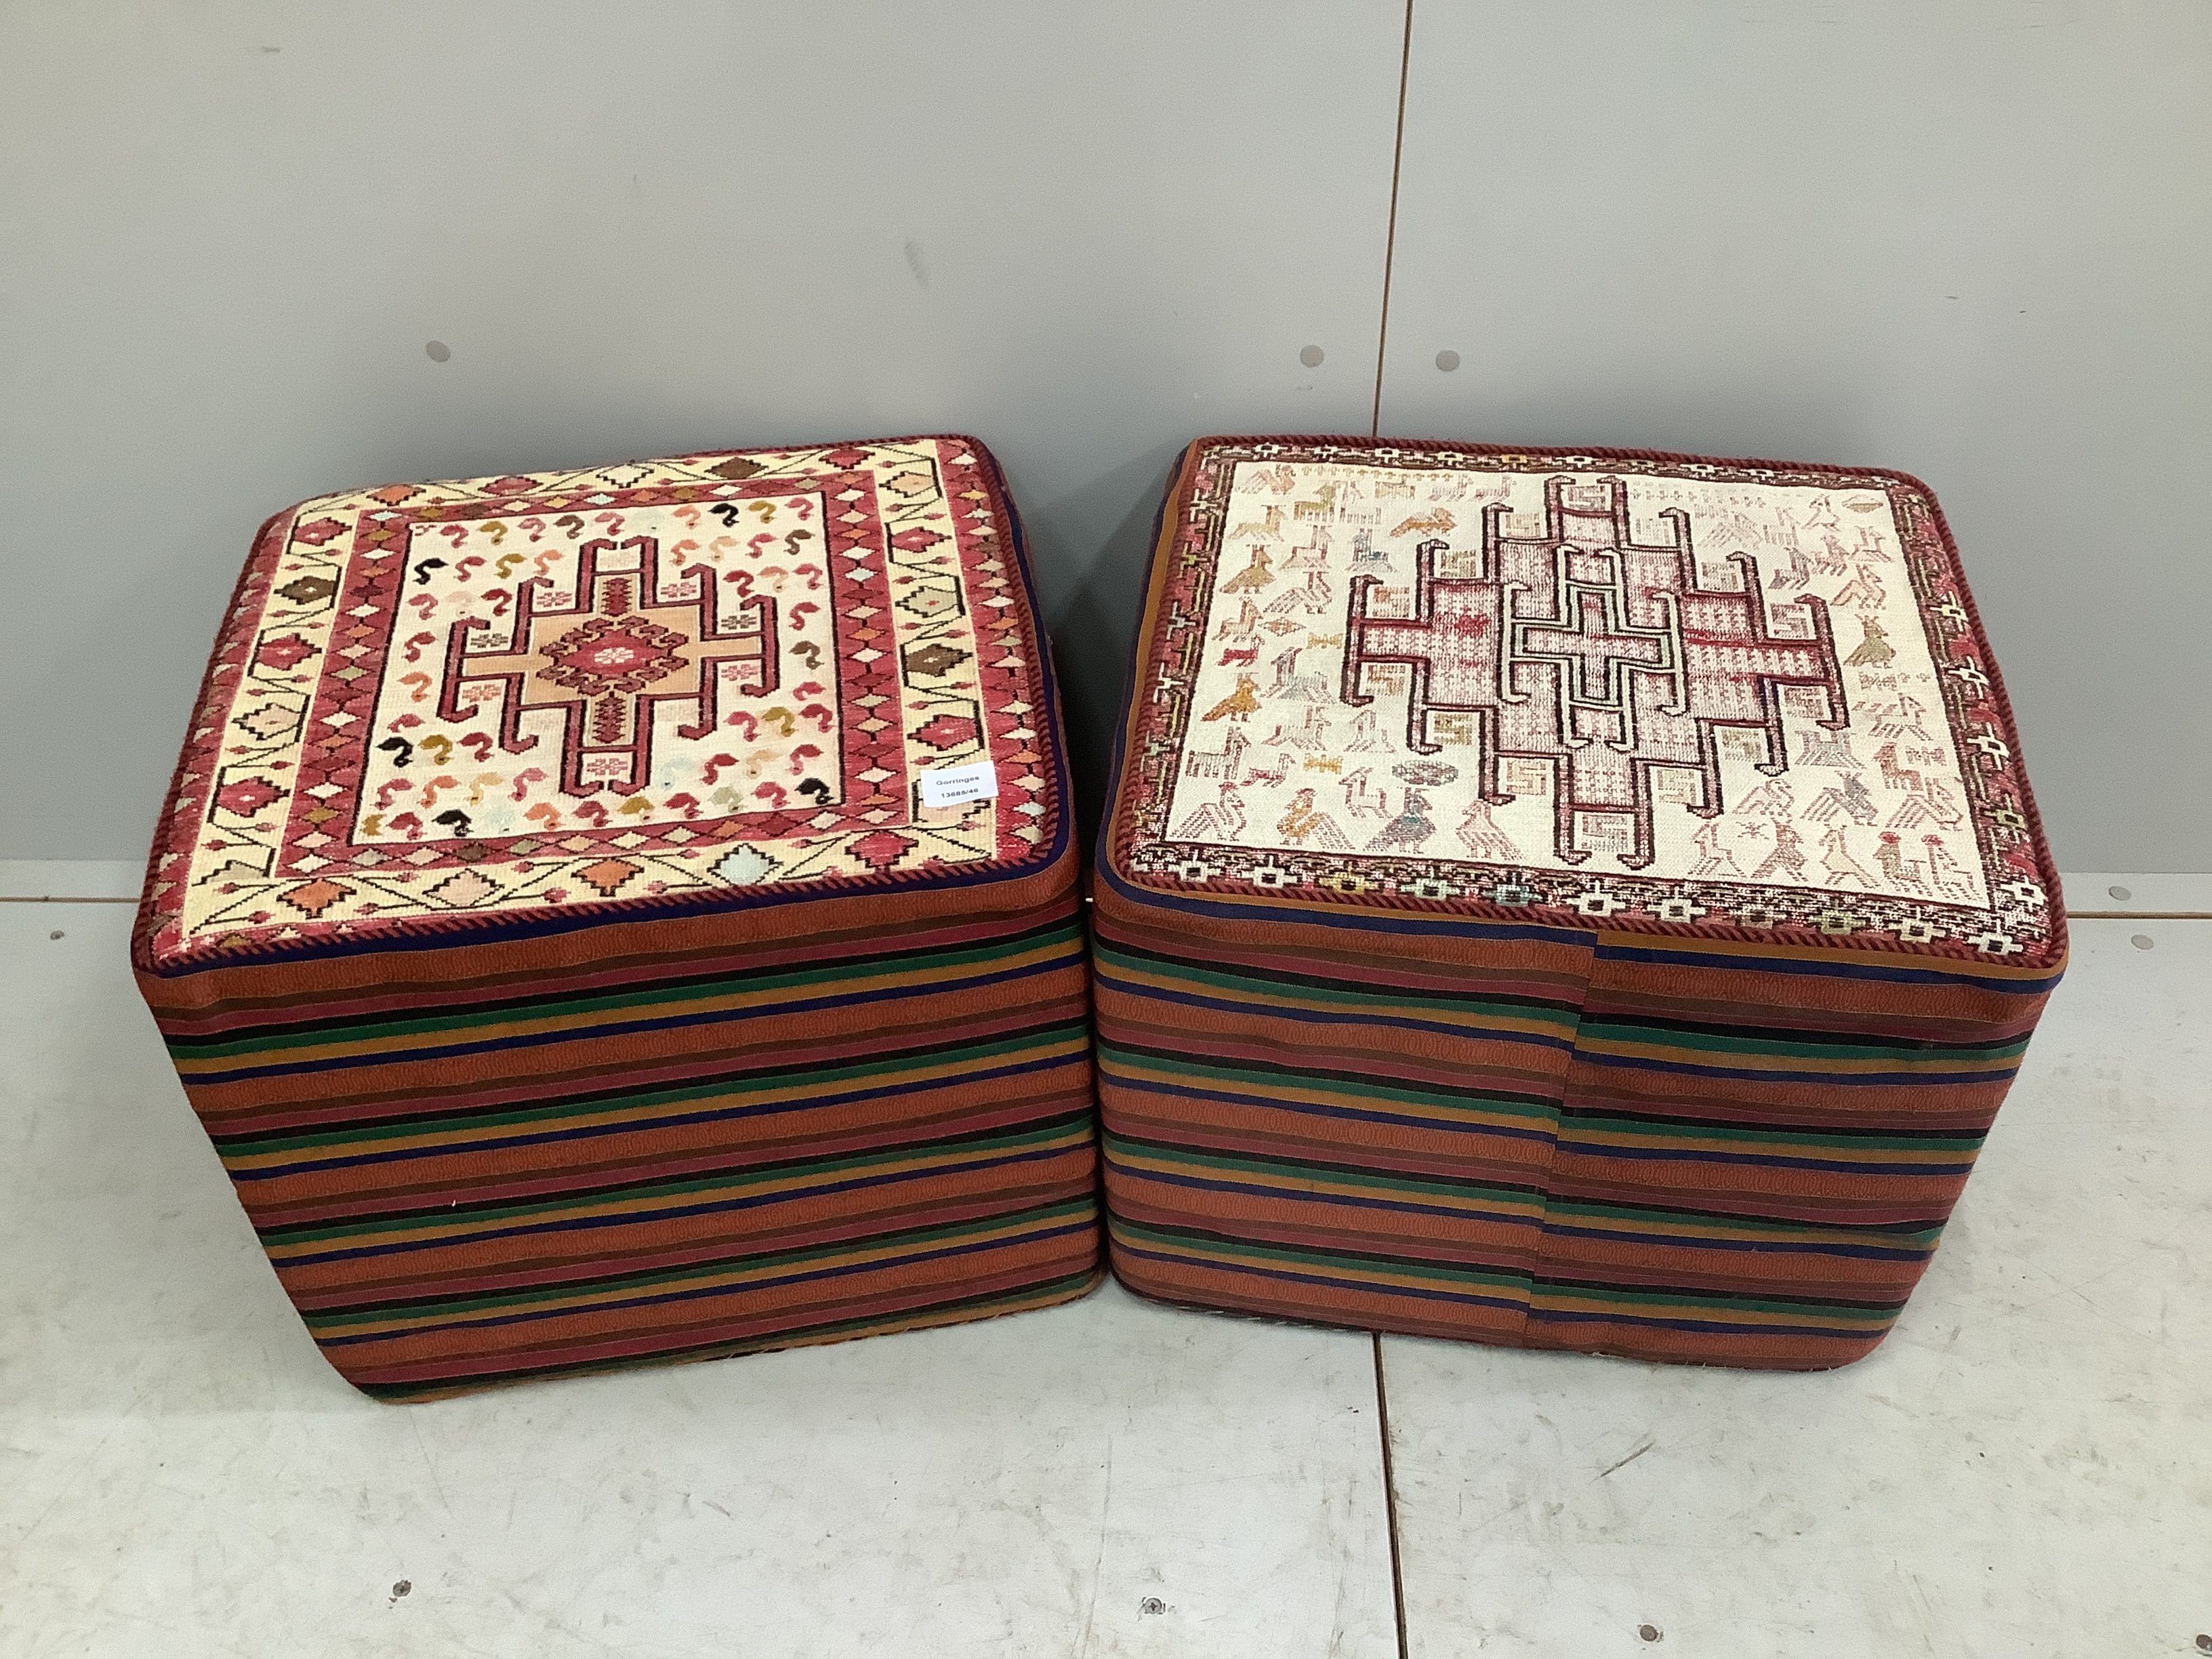 Two Kilim square pouffes, width 48cm, height 40cm